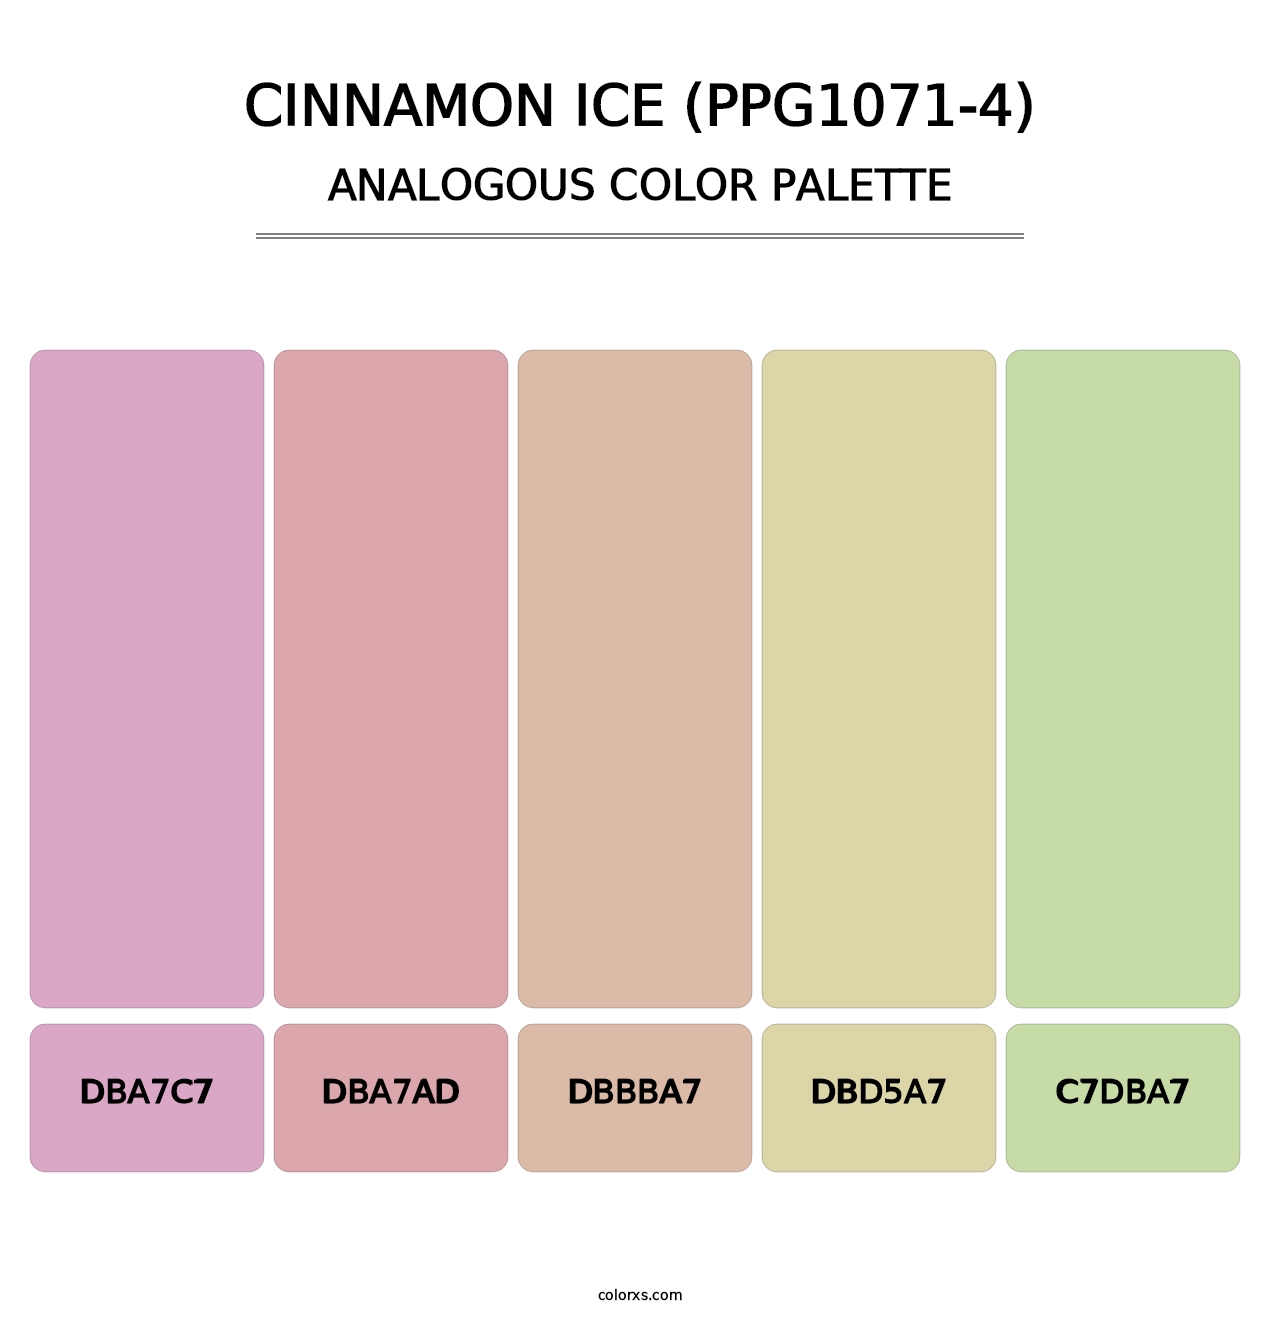 Cinnamon Ice (PPG1071-4) - Analogous Color Palette